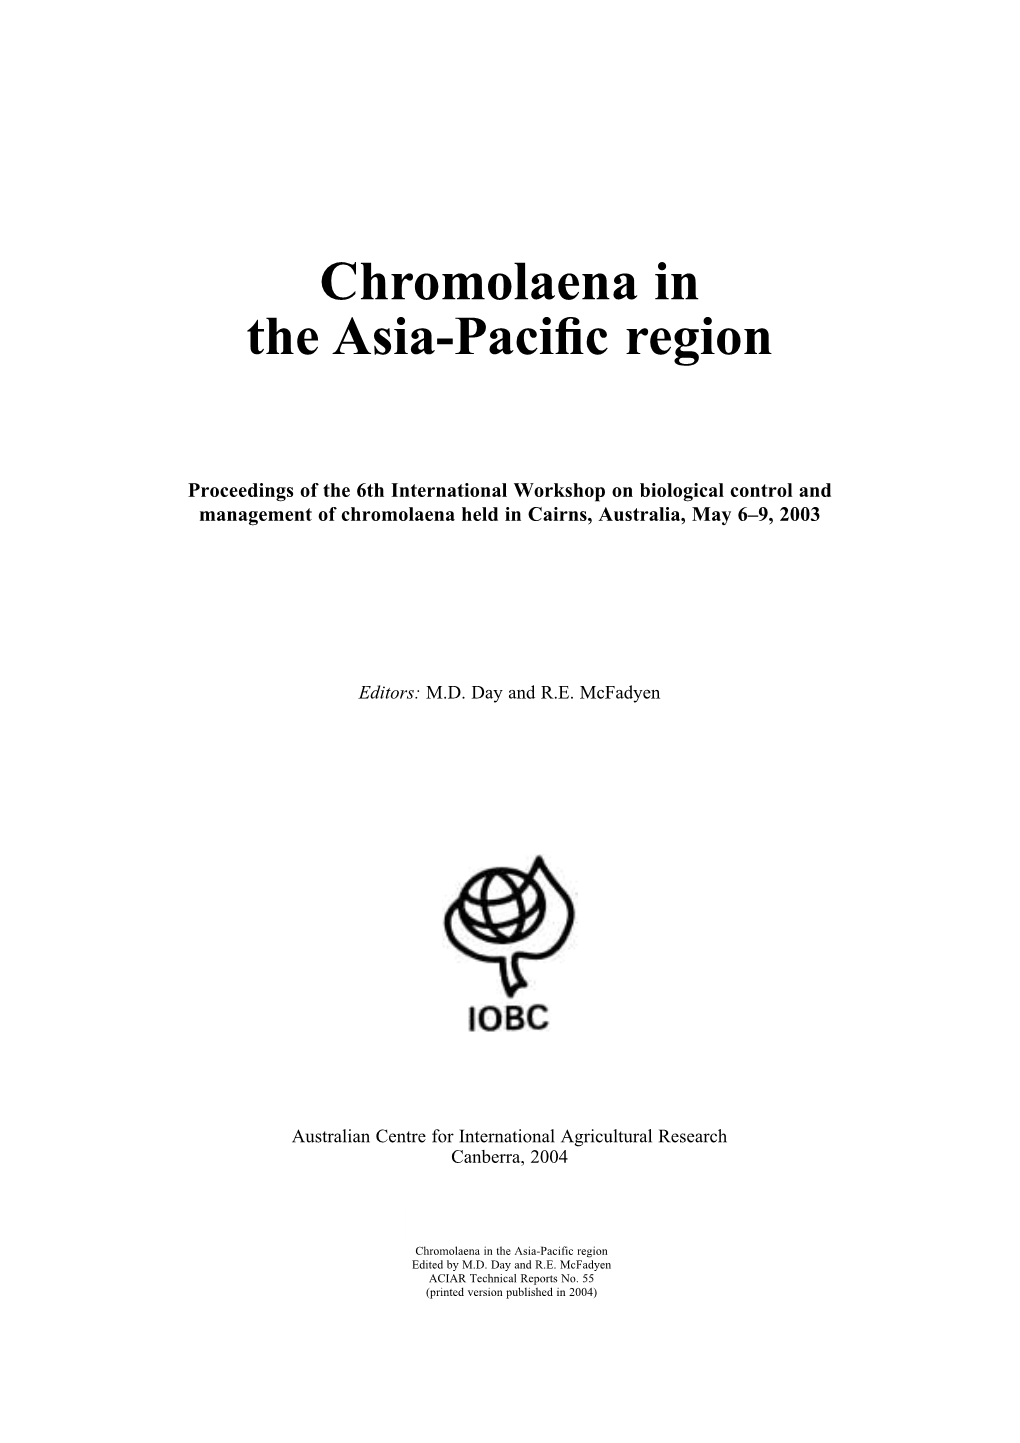 Chromolaena in the Asia-Paciﬁc Region